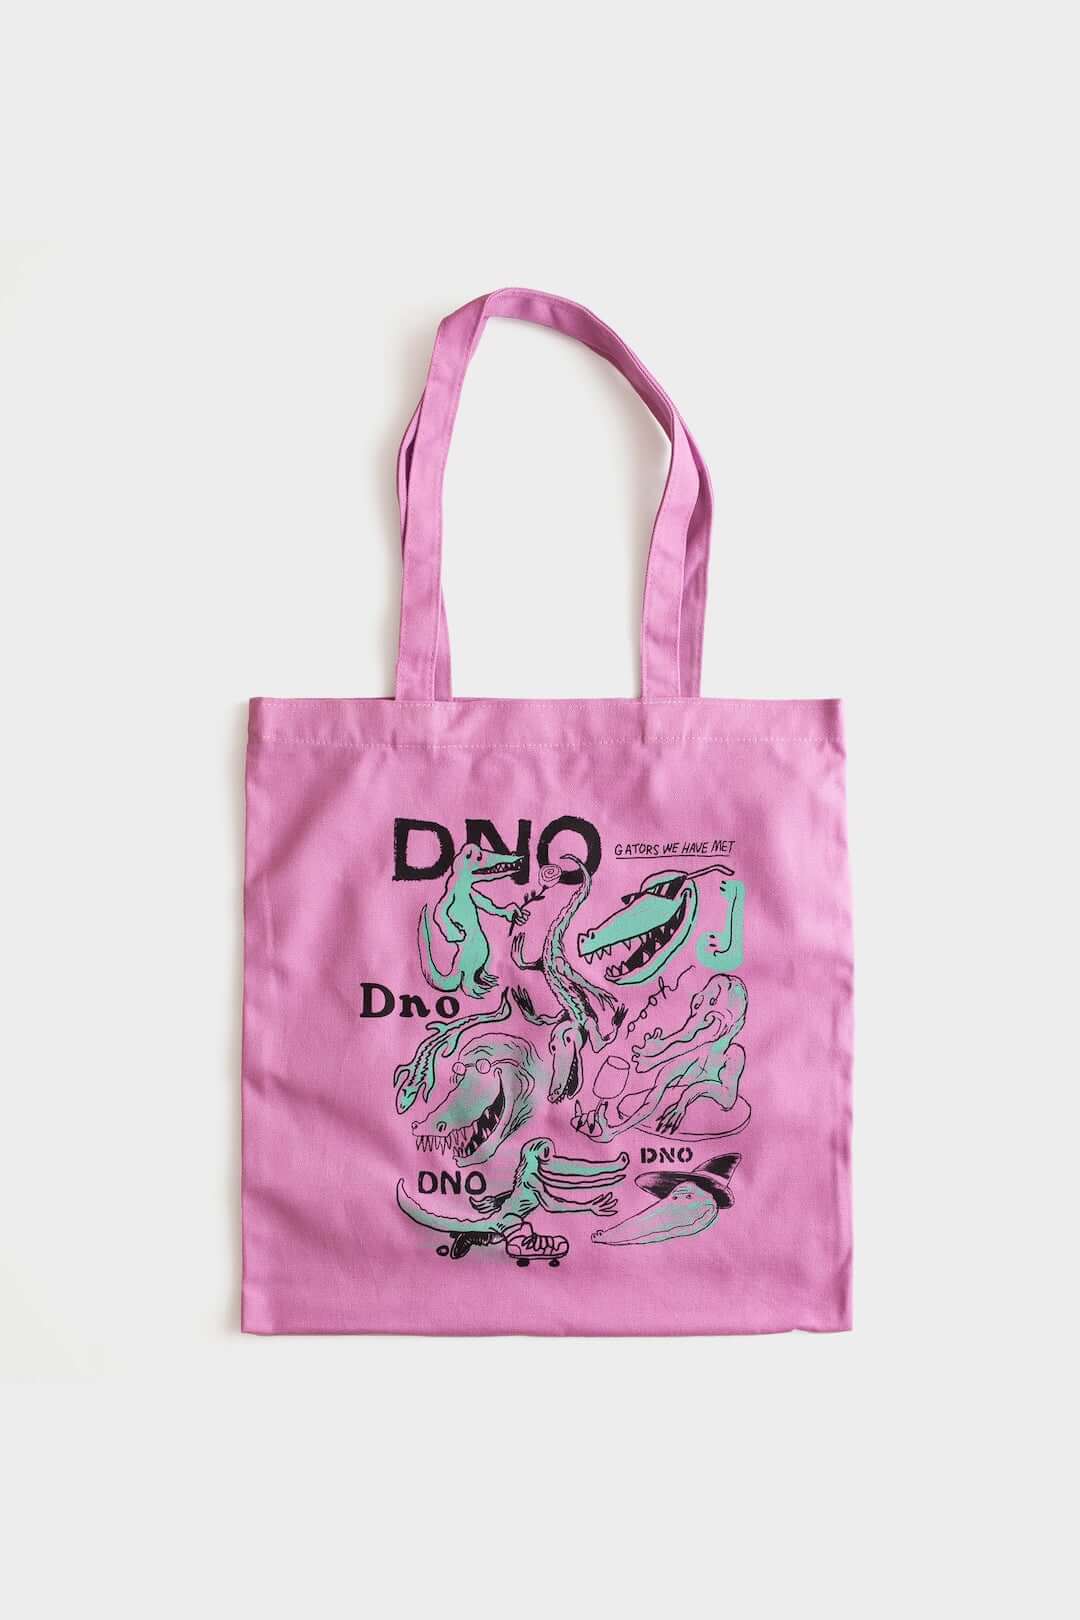 Gators We Have Met Tote Bag - Accessories - DNO